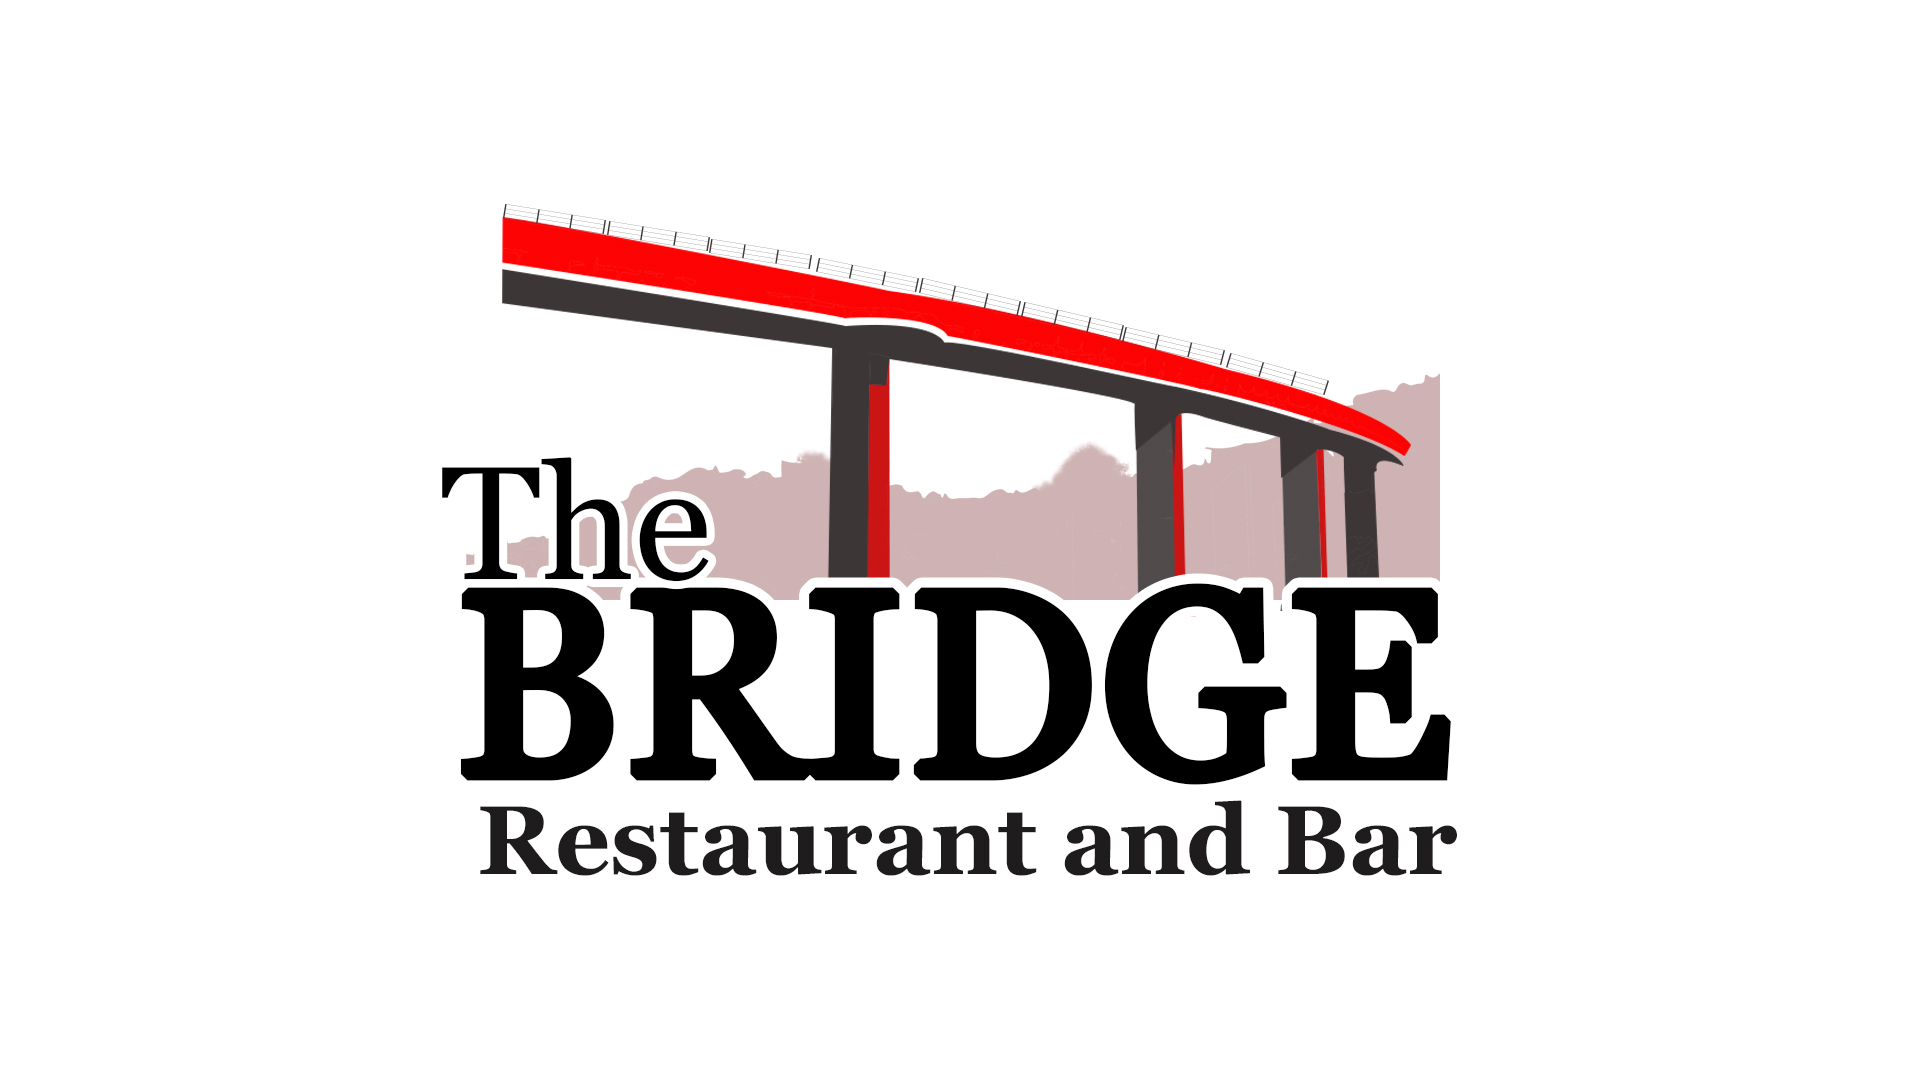 The Bridge Restaurant and Bar